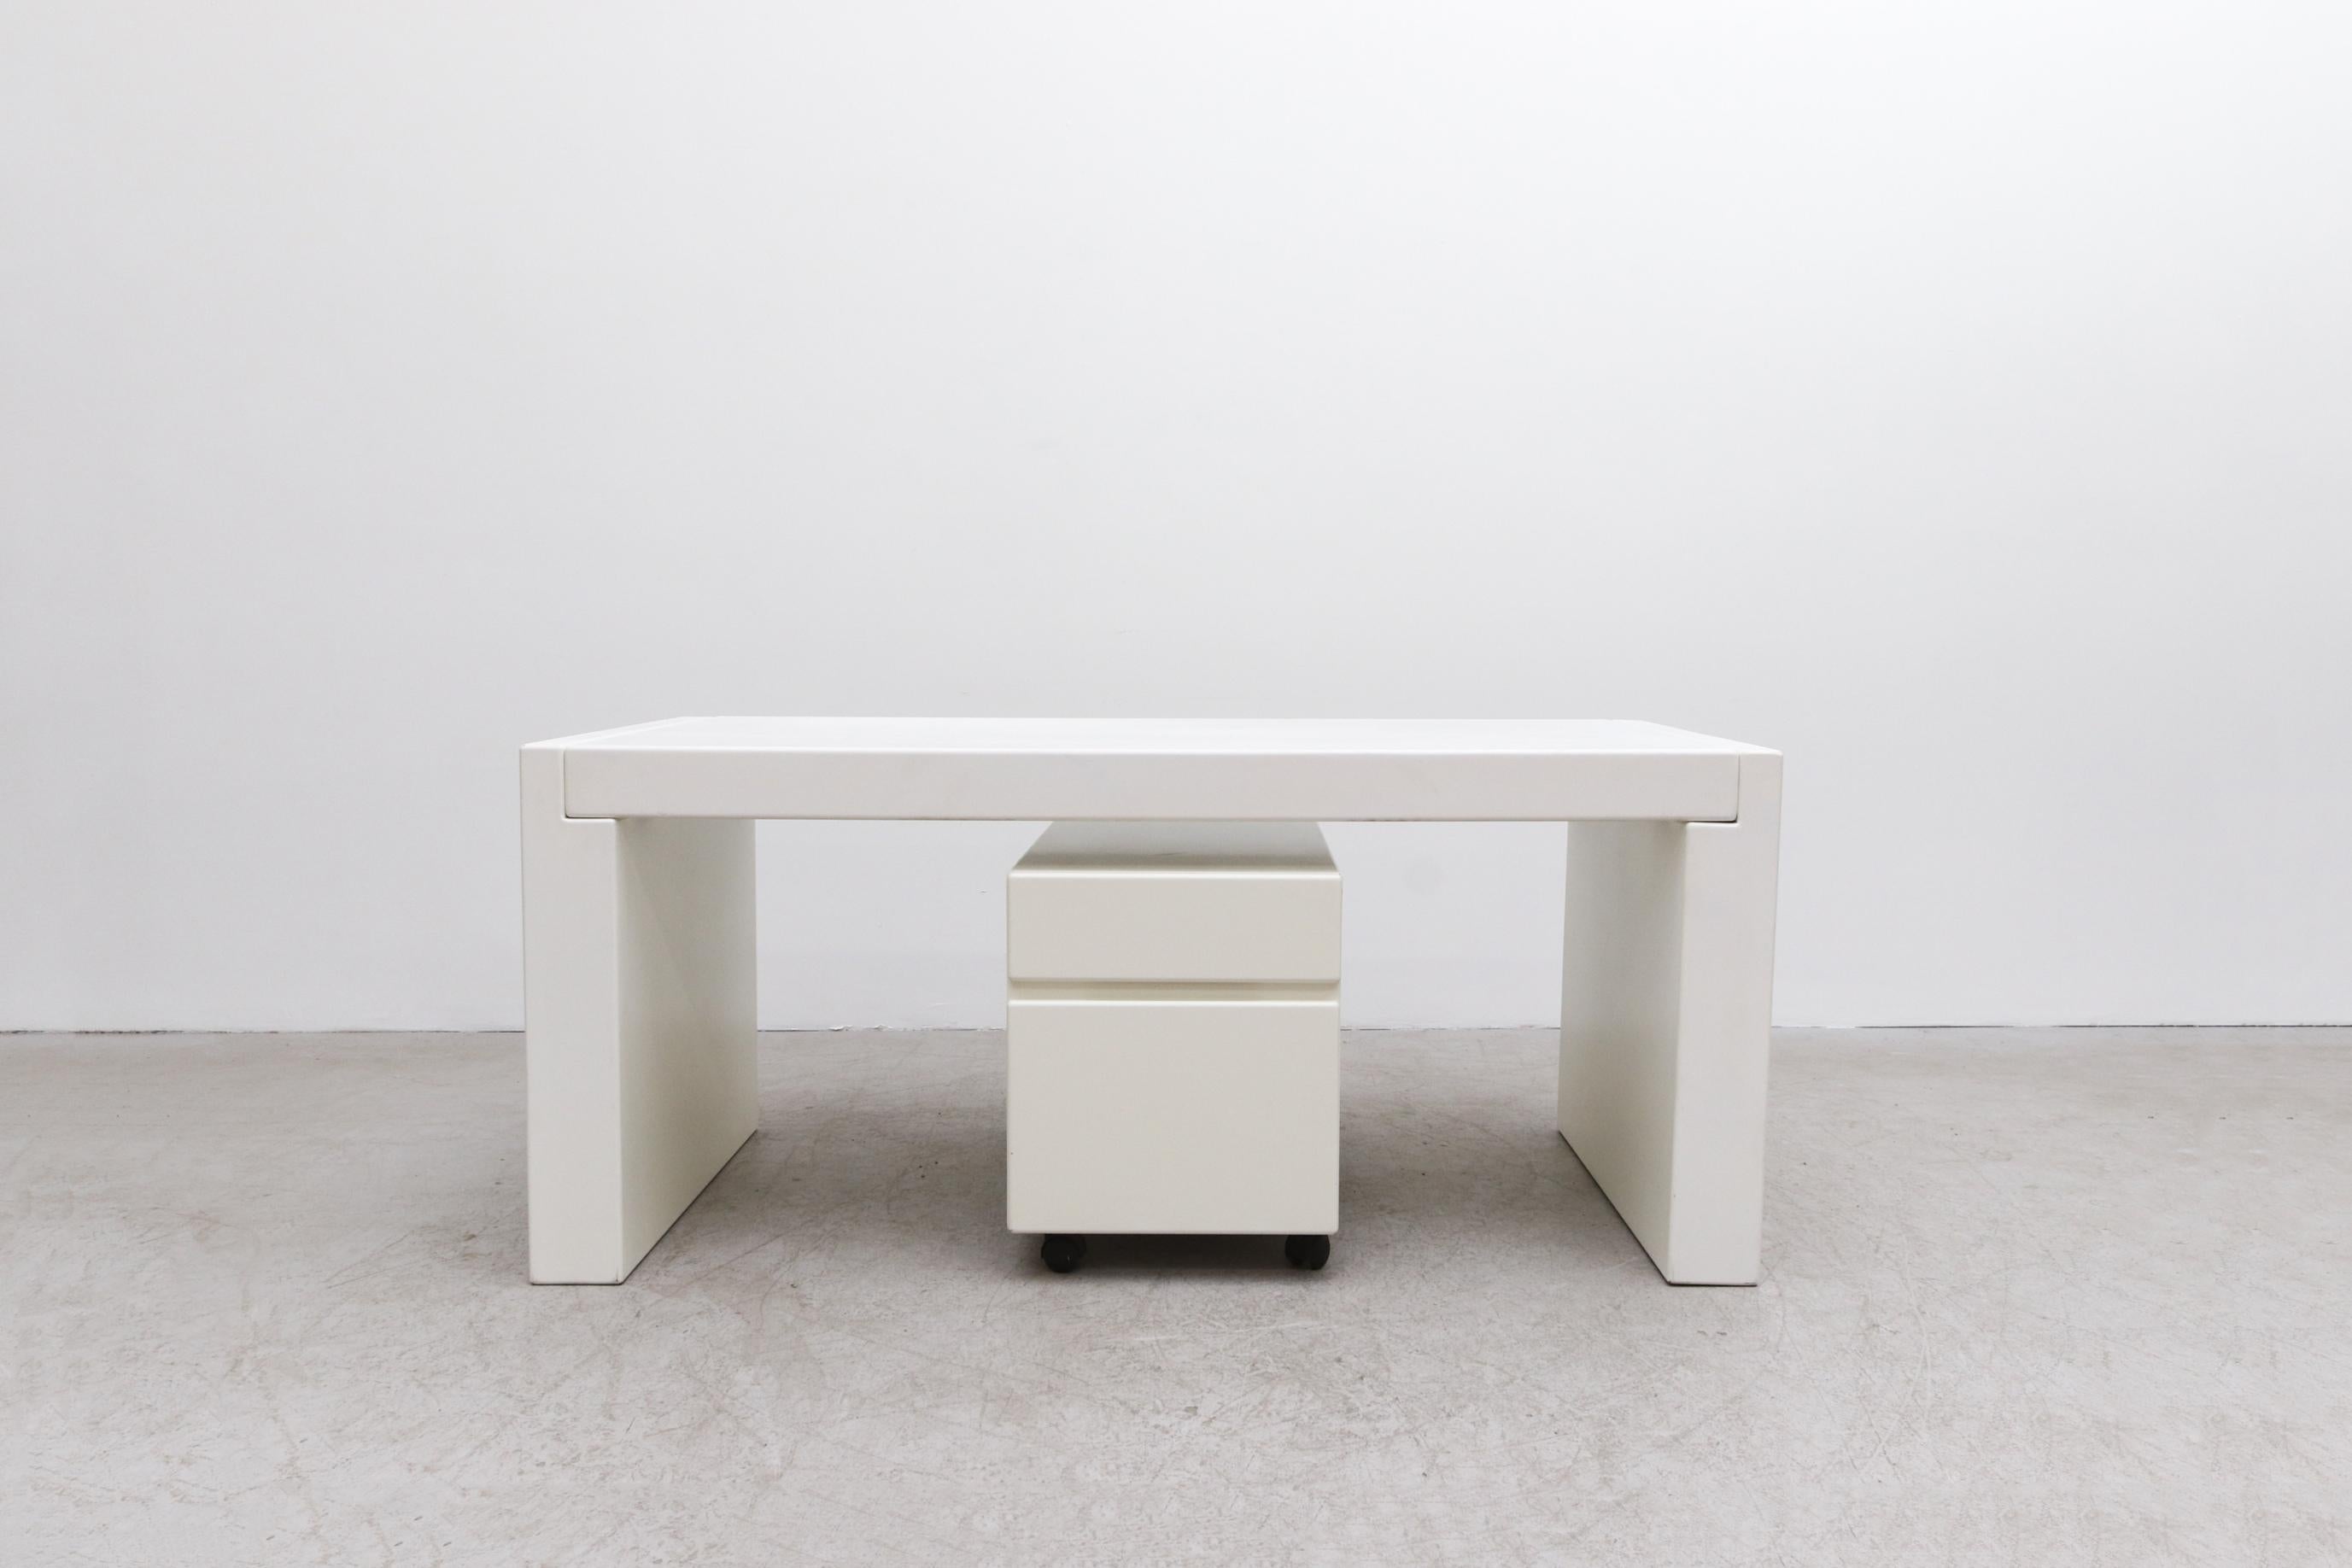 Fiberglass Jean Maneval Inspired Mod Desk with Rolling Storage